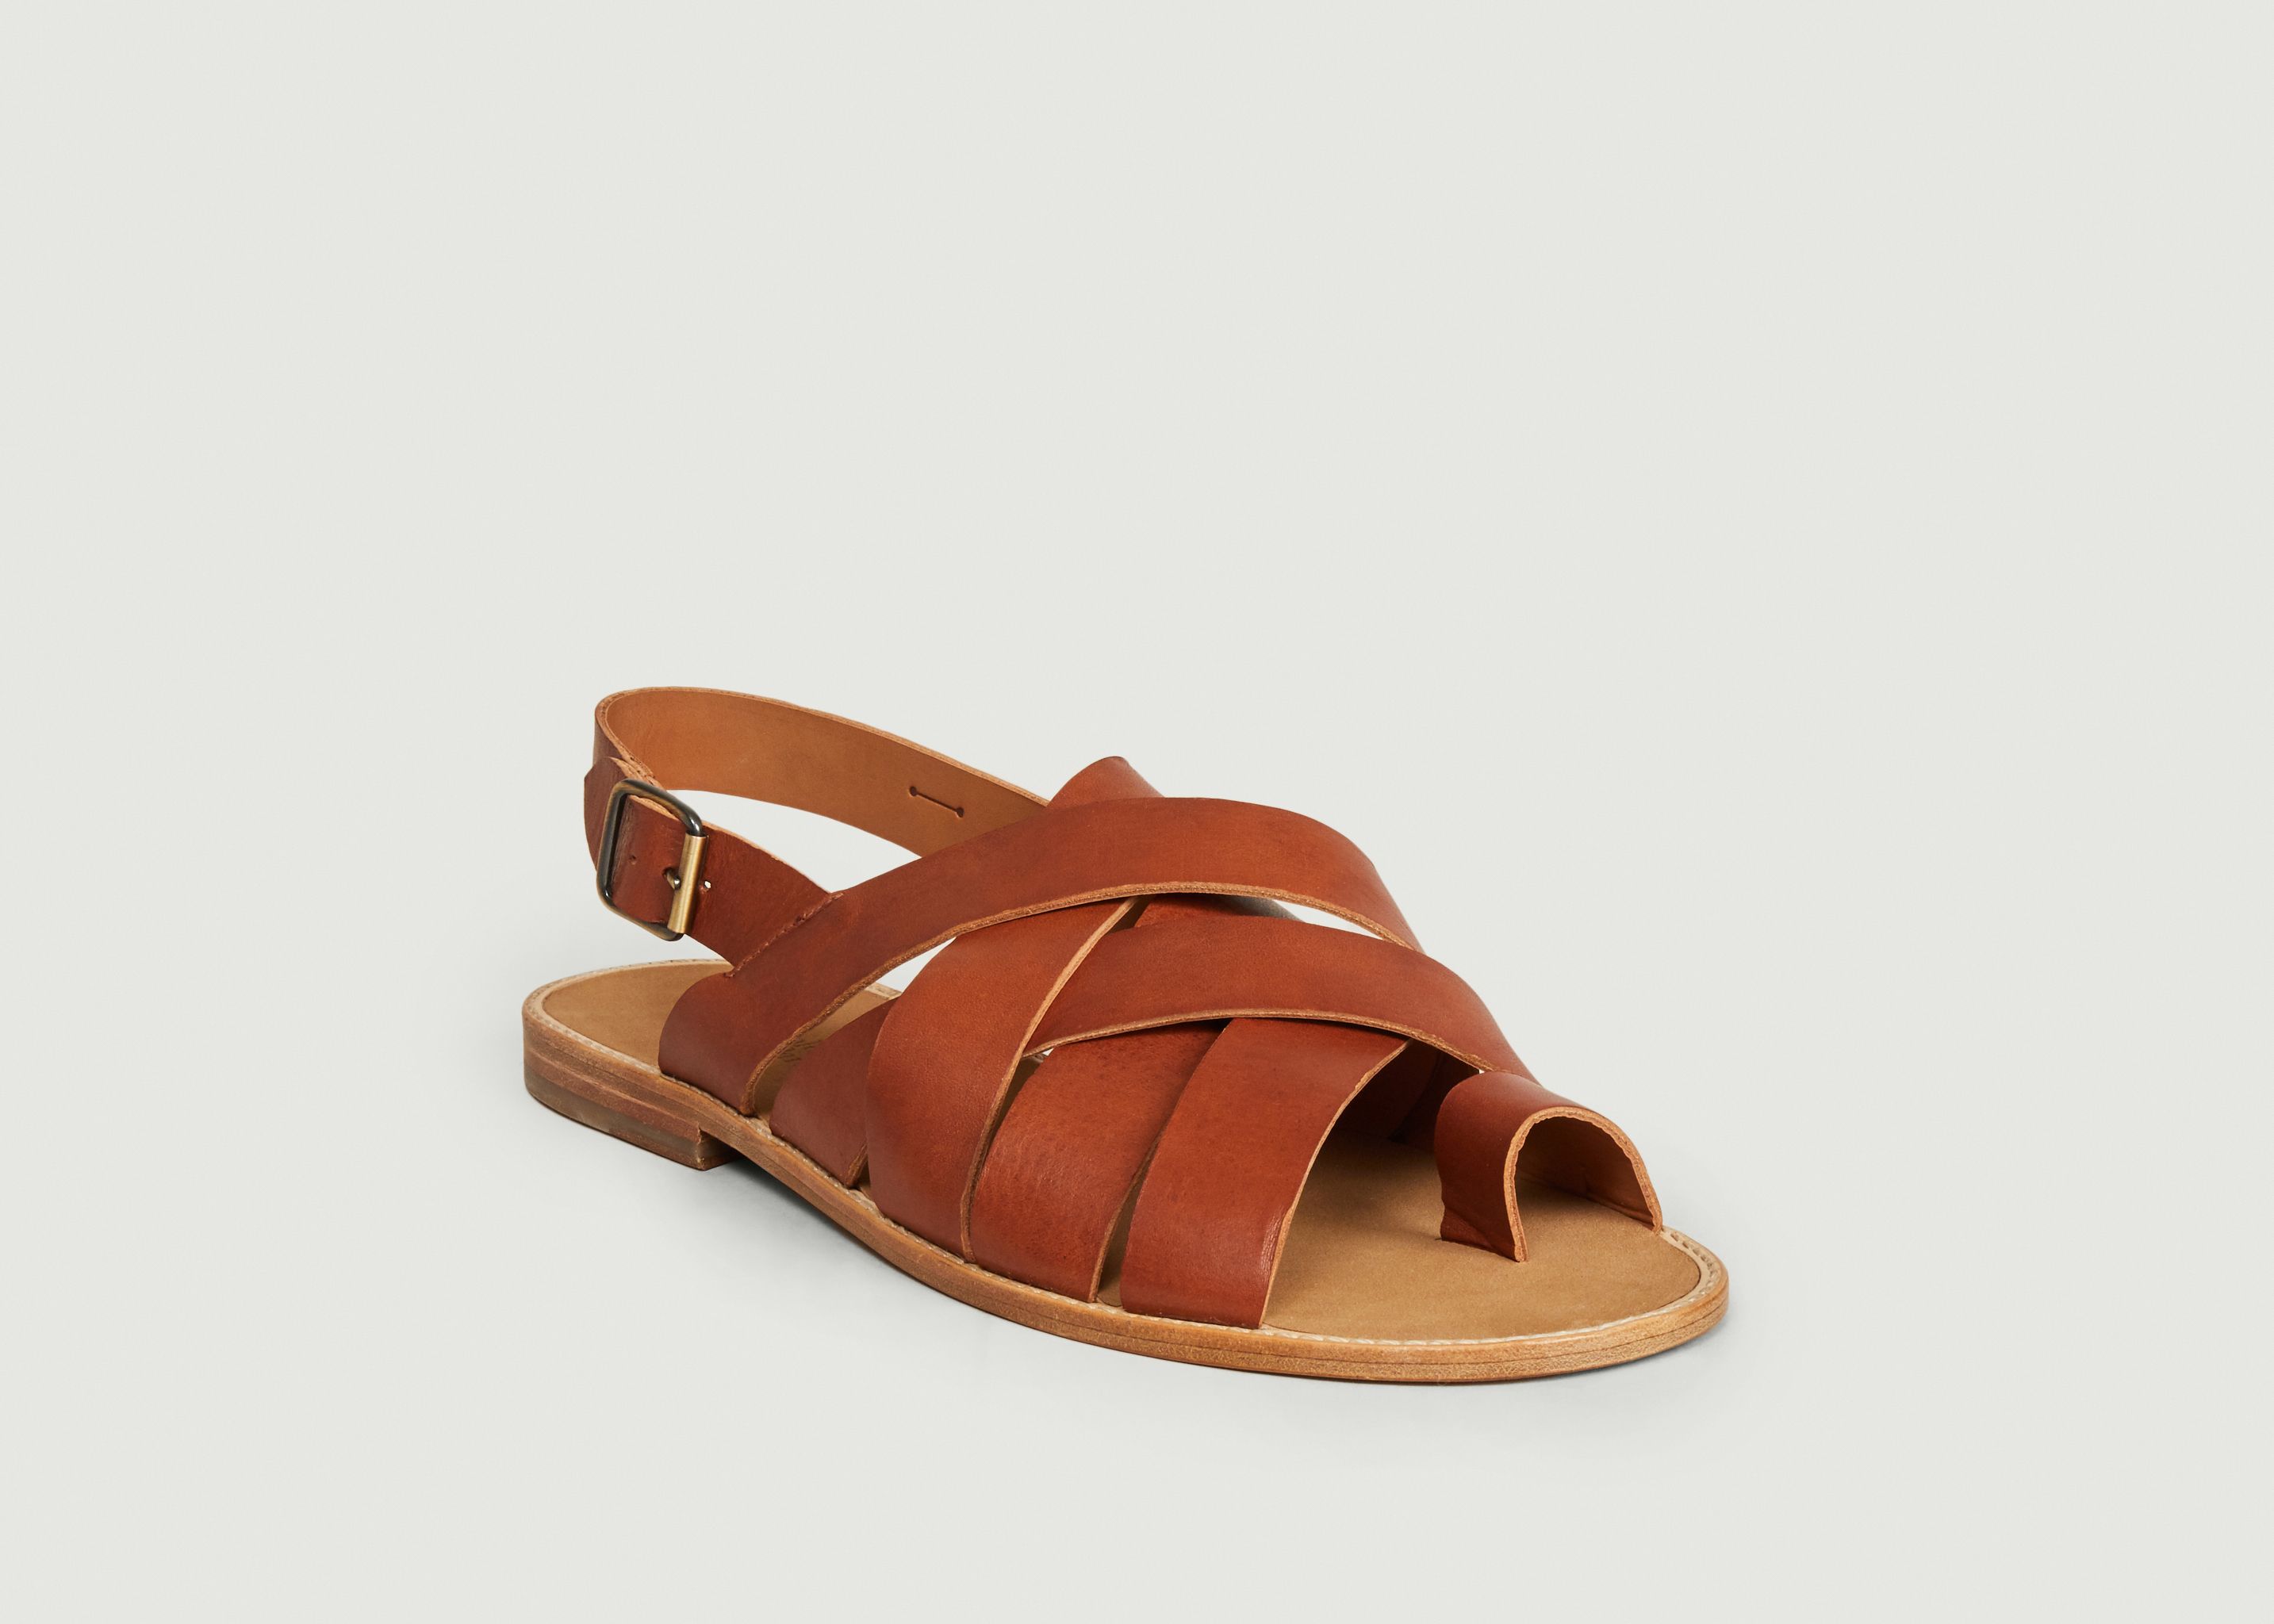 Banjul leather sandals - Anthology Paris